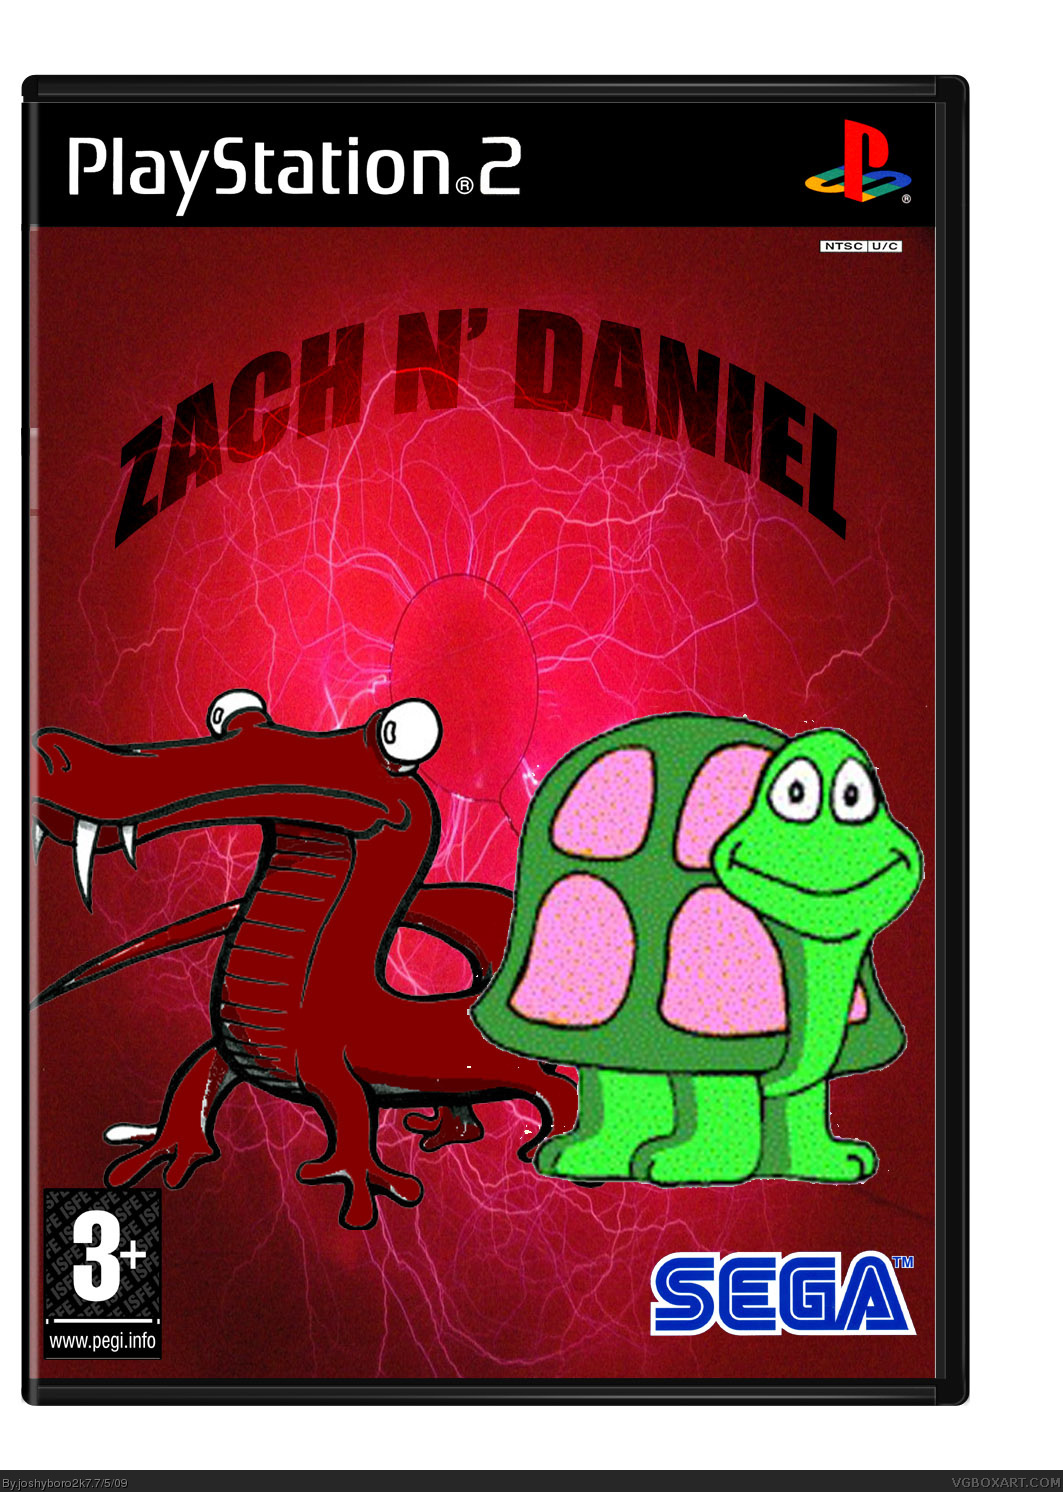 Zach N' Daniel box cover